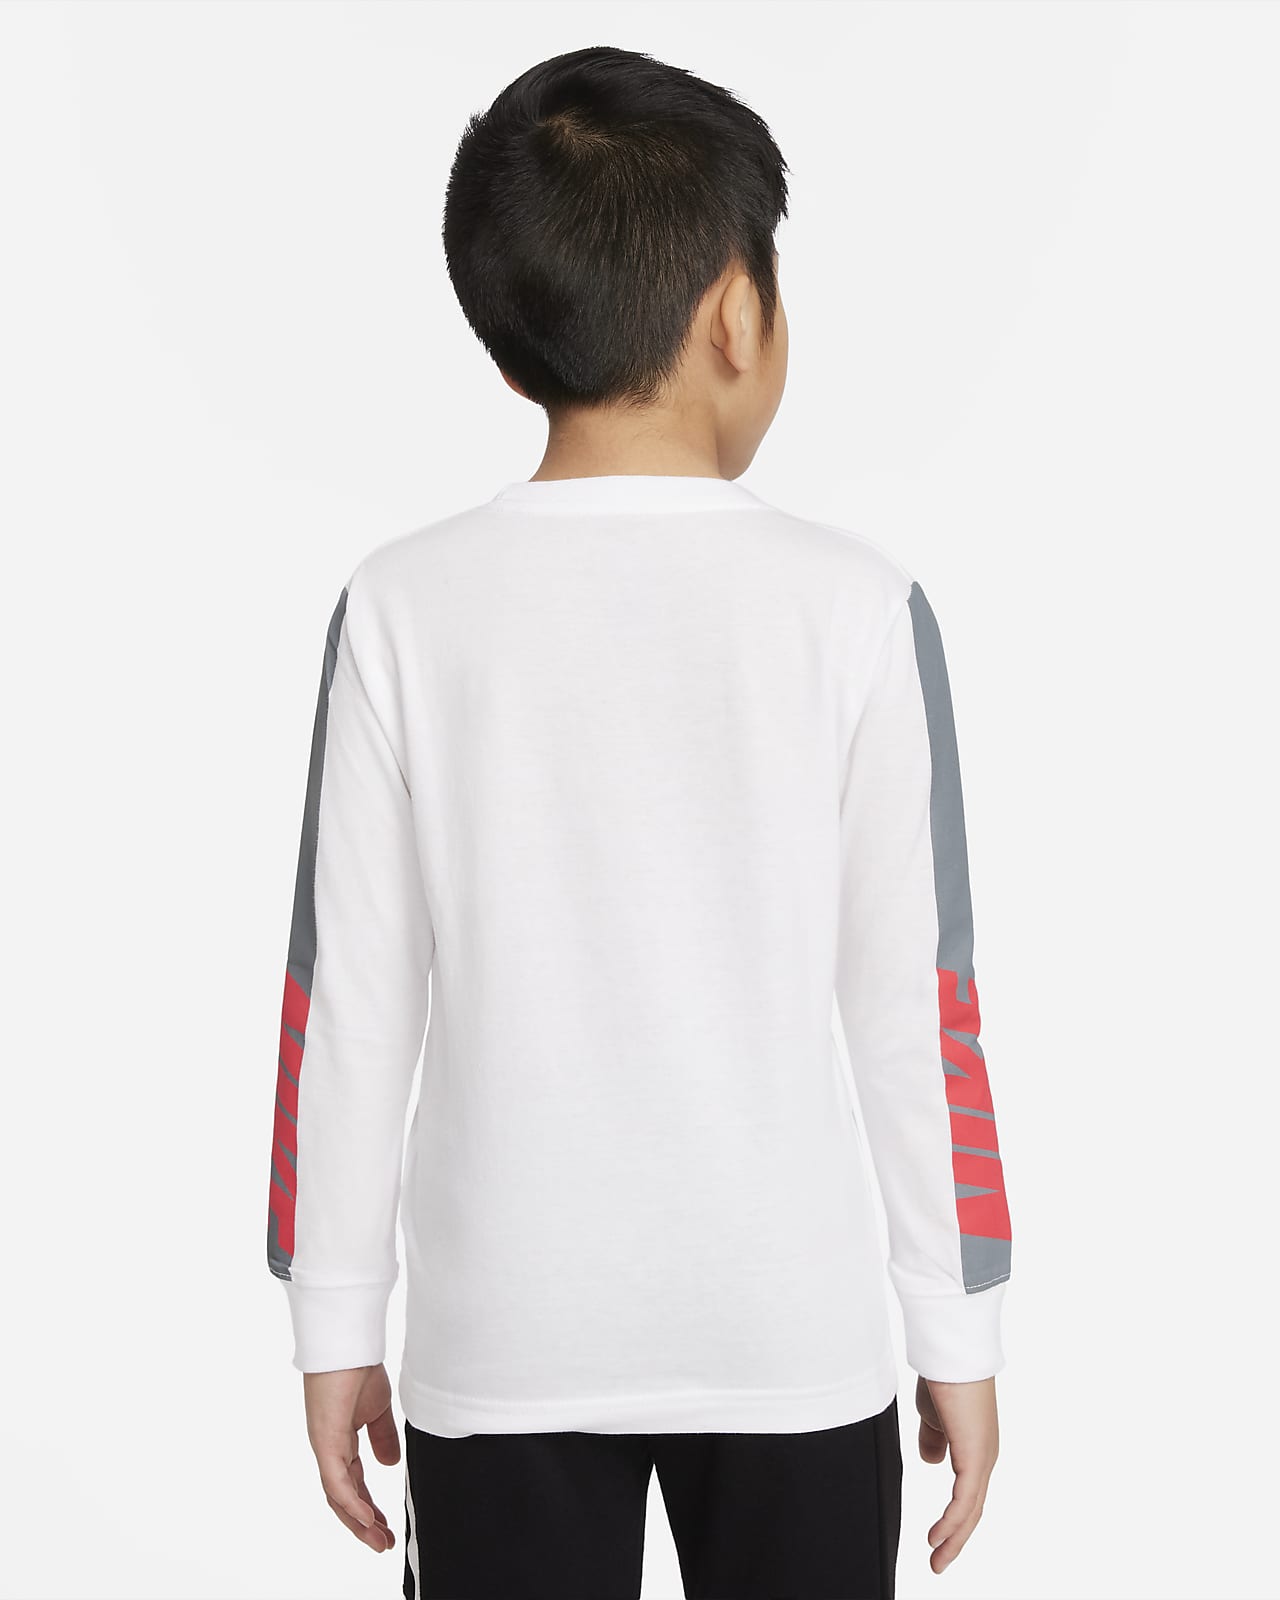 Nike Little Kids' Long-Sleeve Shirt. Nike.com